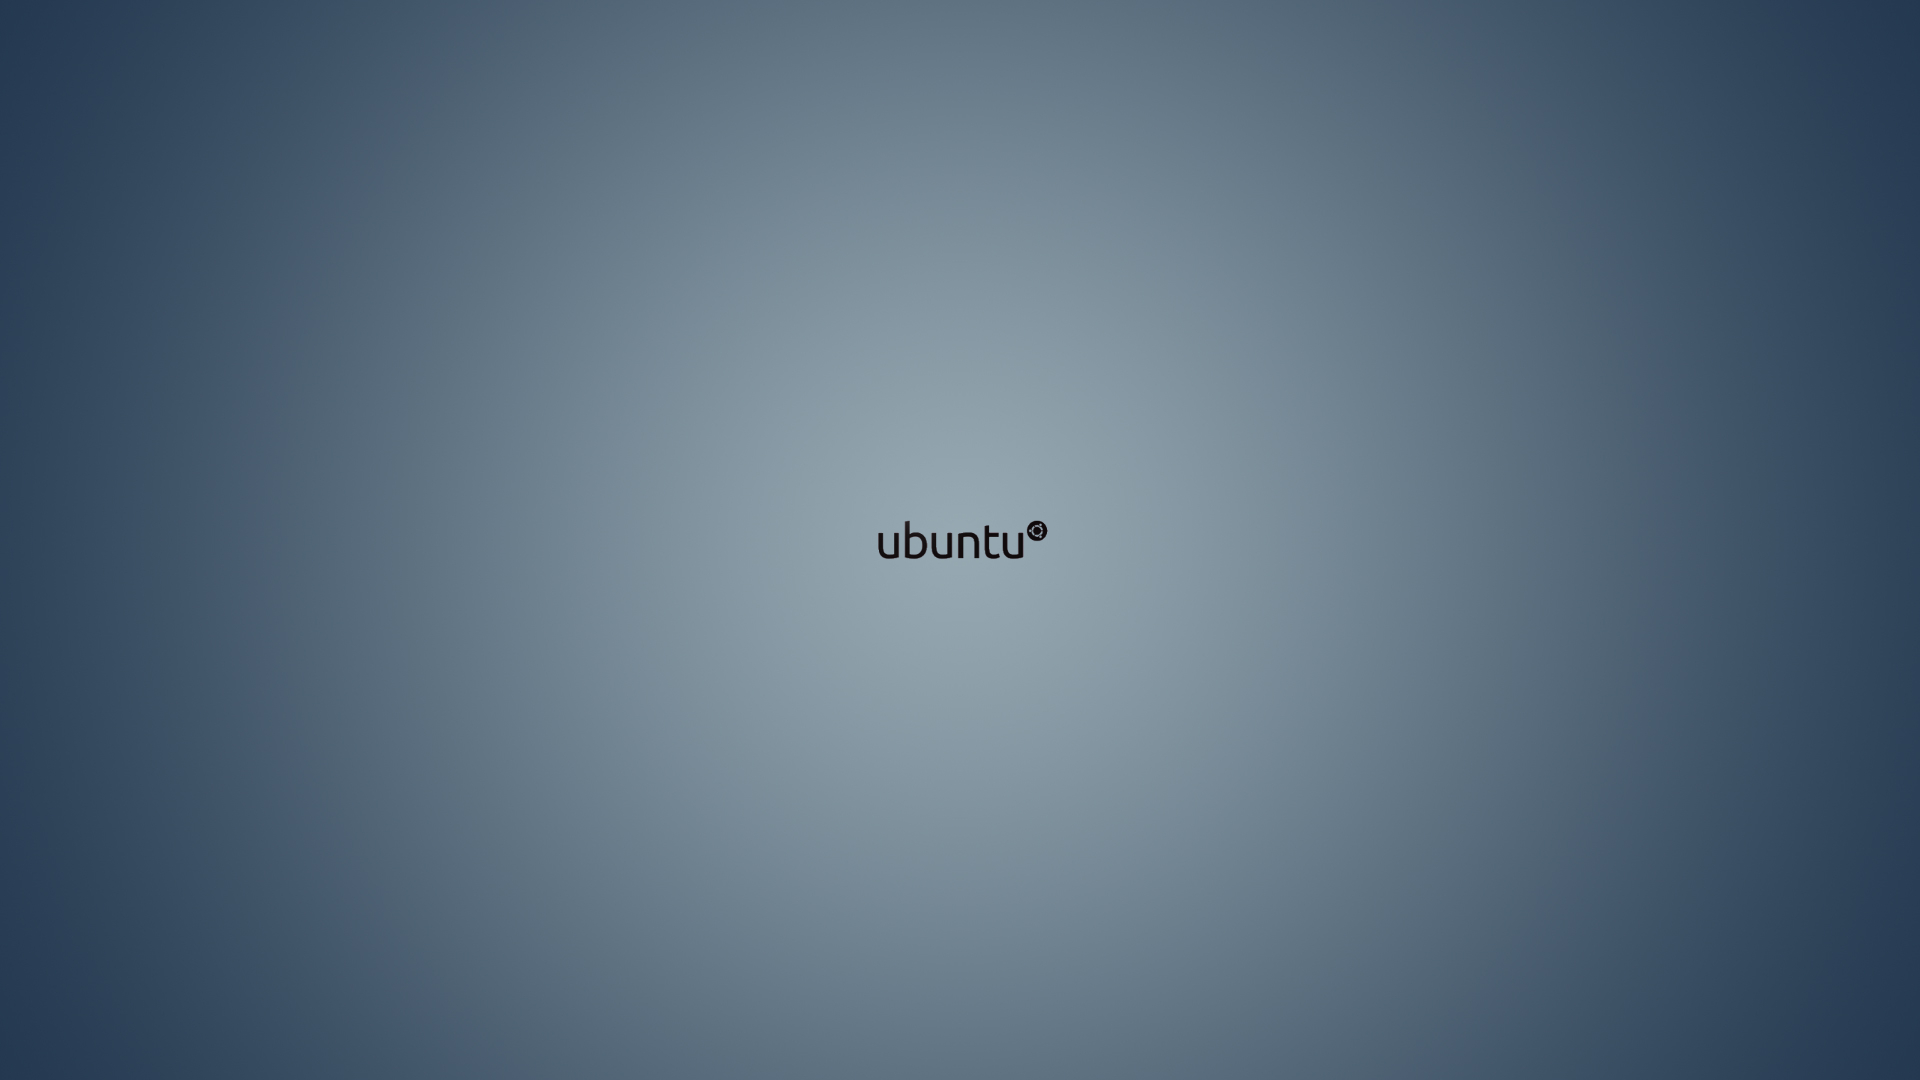 Ubuntu_Simple_Gradients_by_leonardomdq